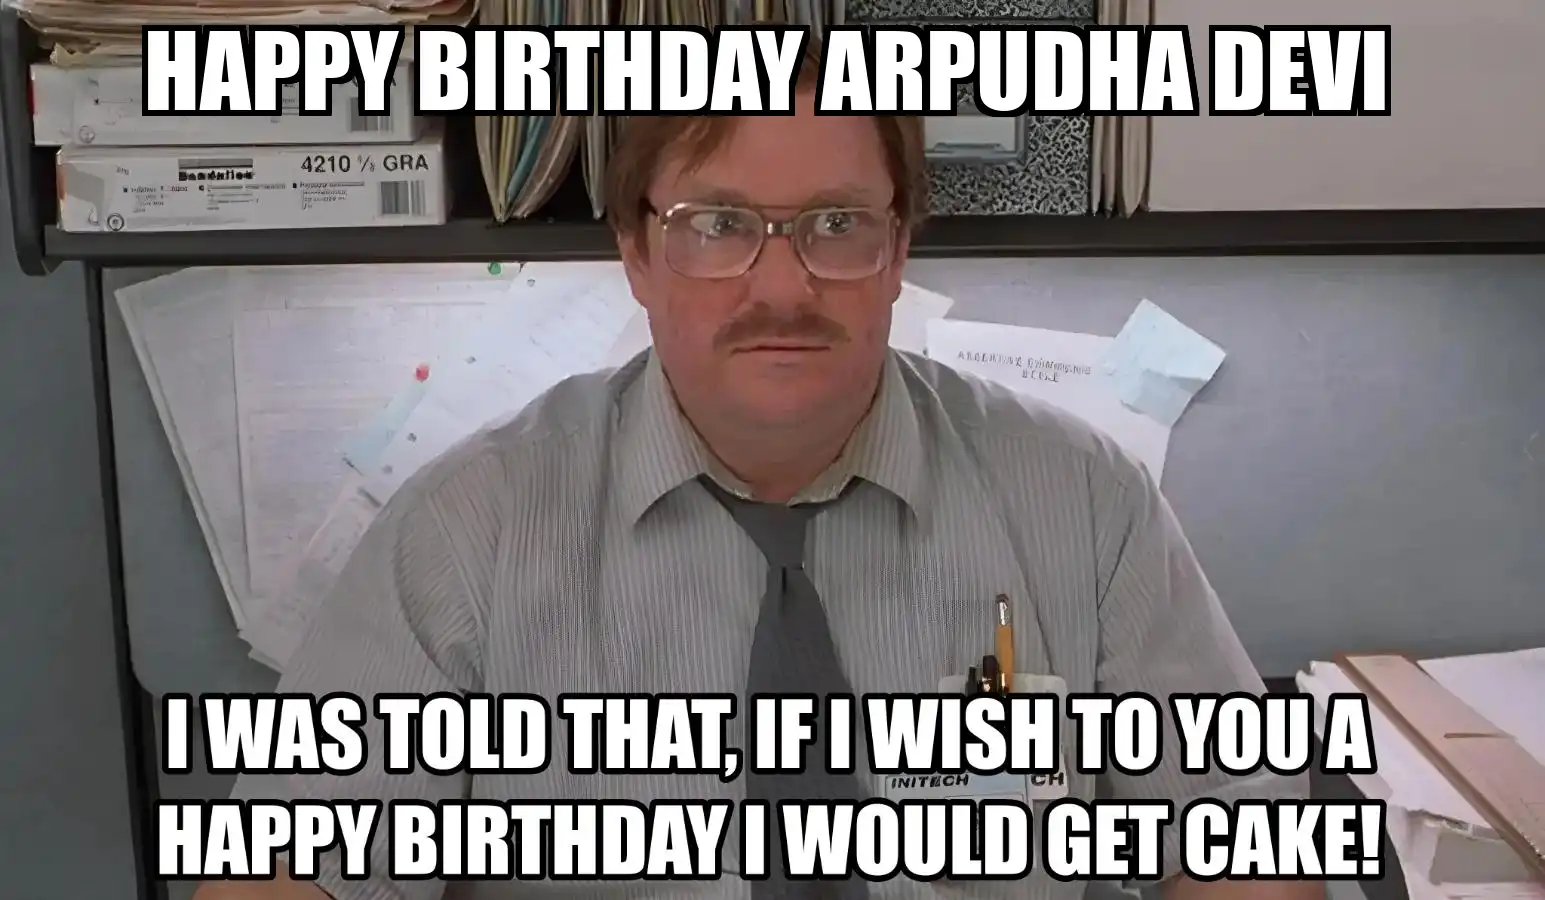 Happy Birthday Arpudha devi I Would Get A Cake Meme